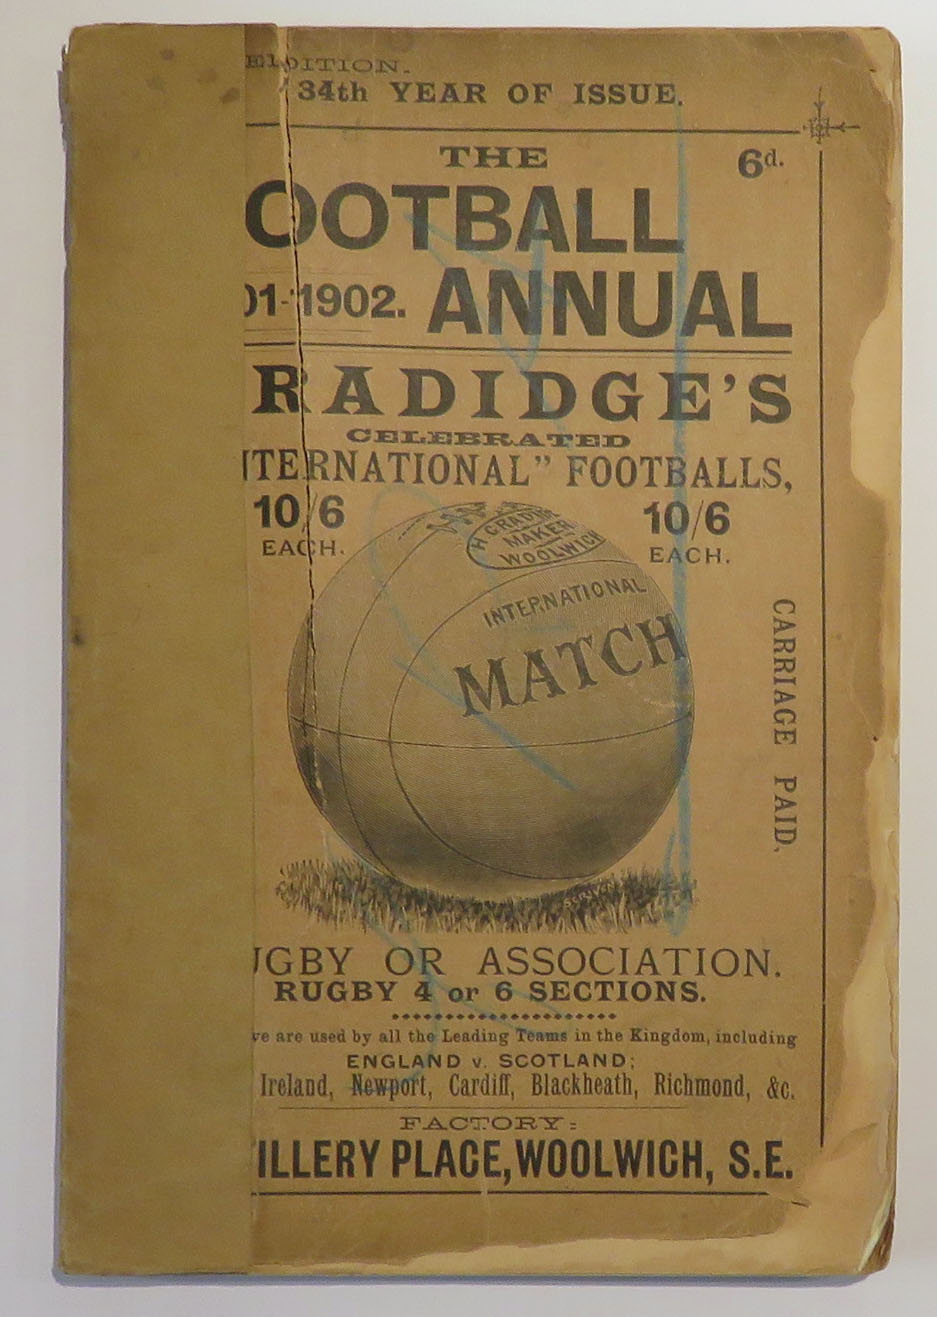 The Football Annual 1901-1902